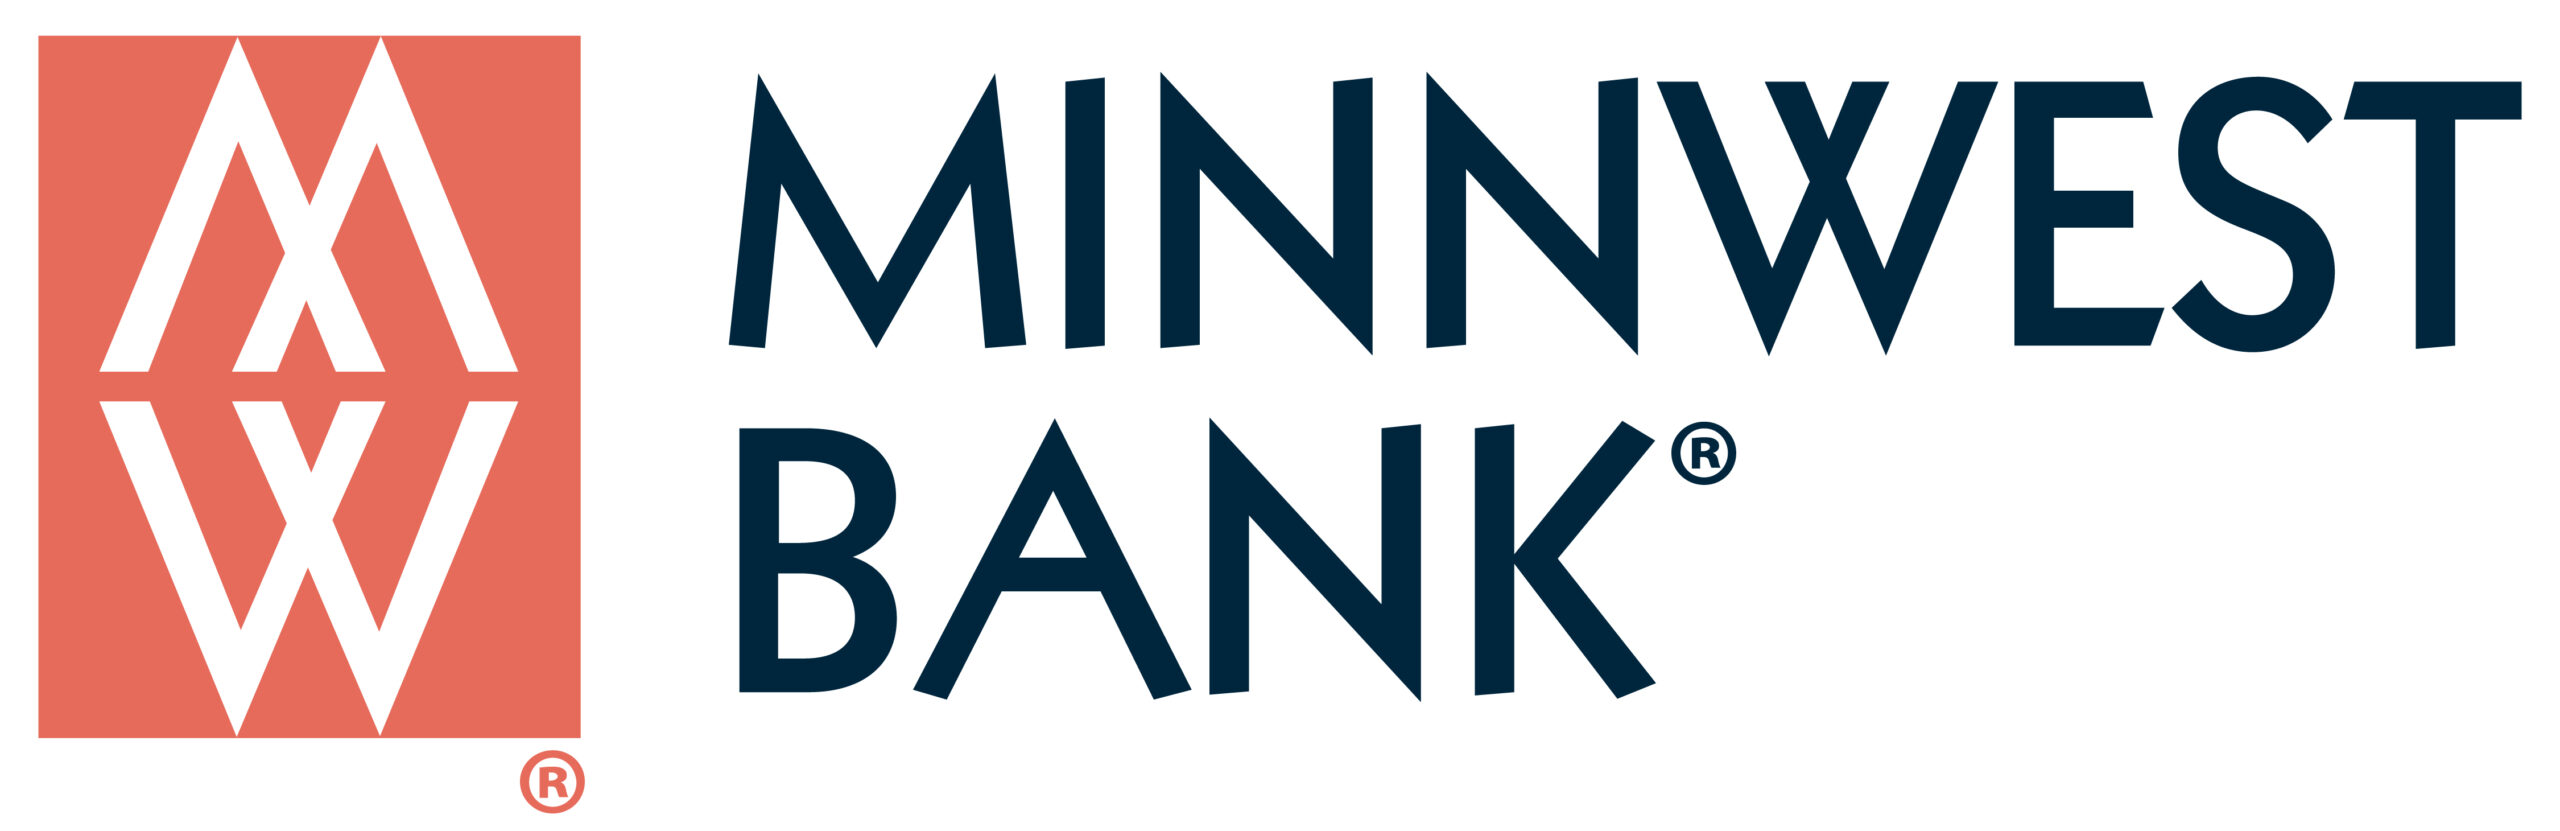 Minnwest Bank logo